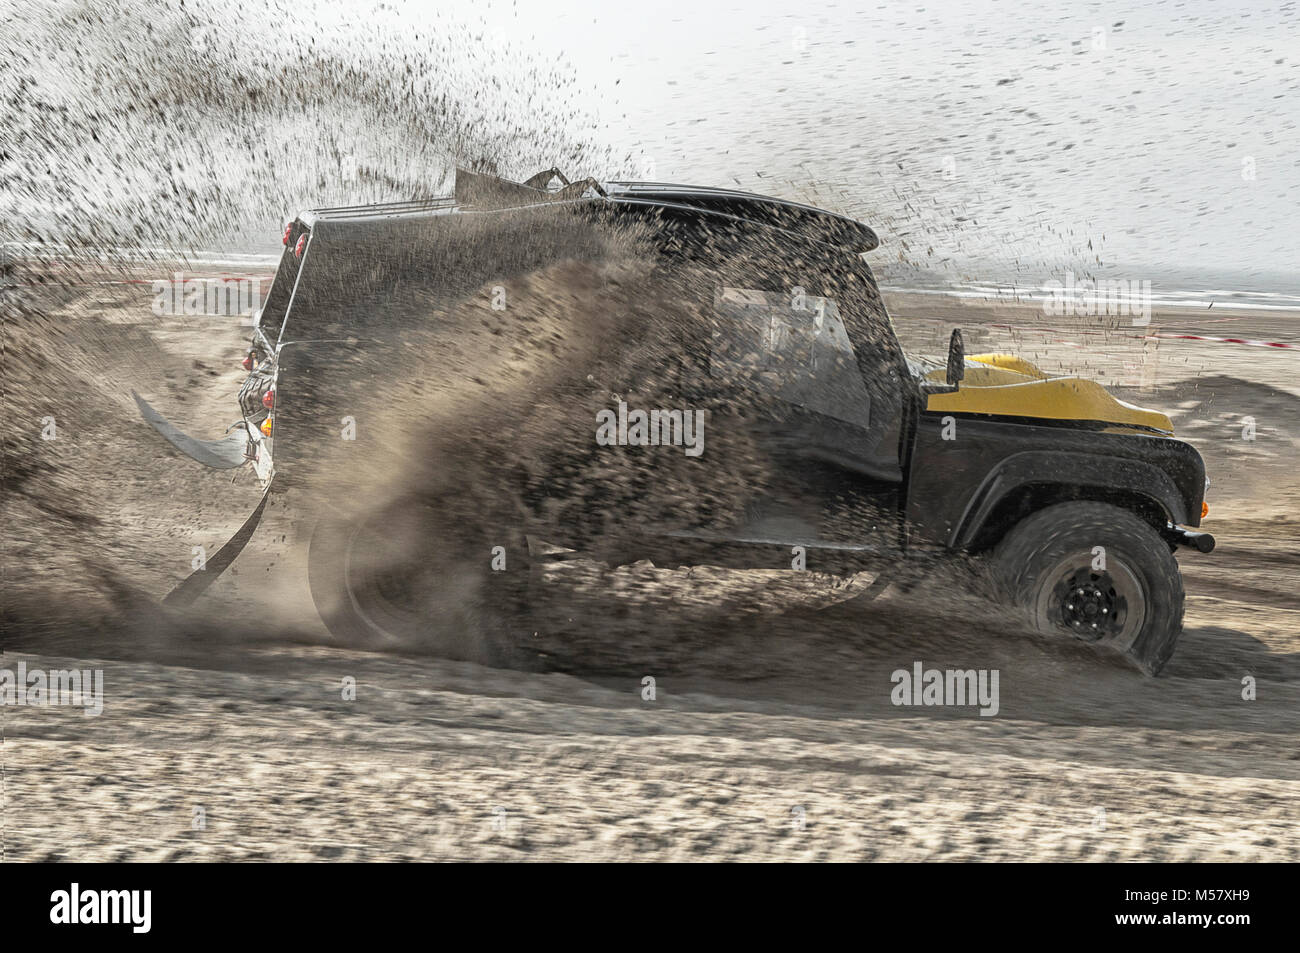 Racing Rover Car Racing am Strand mit hoher Geschwindigkeit Stockfoto